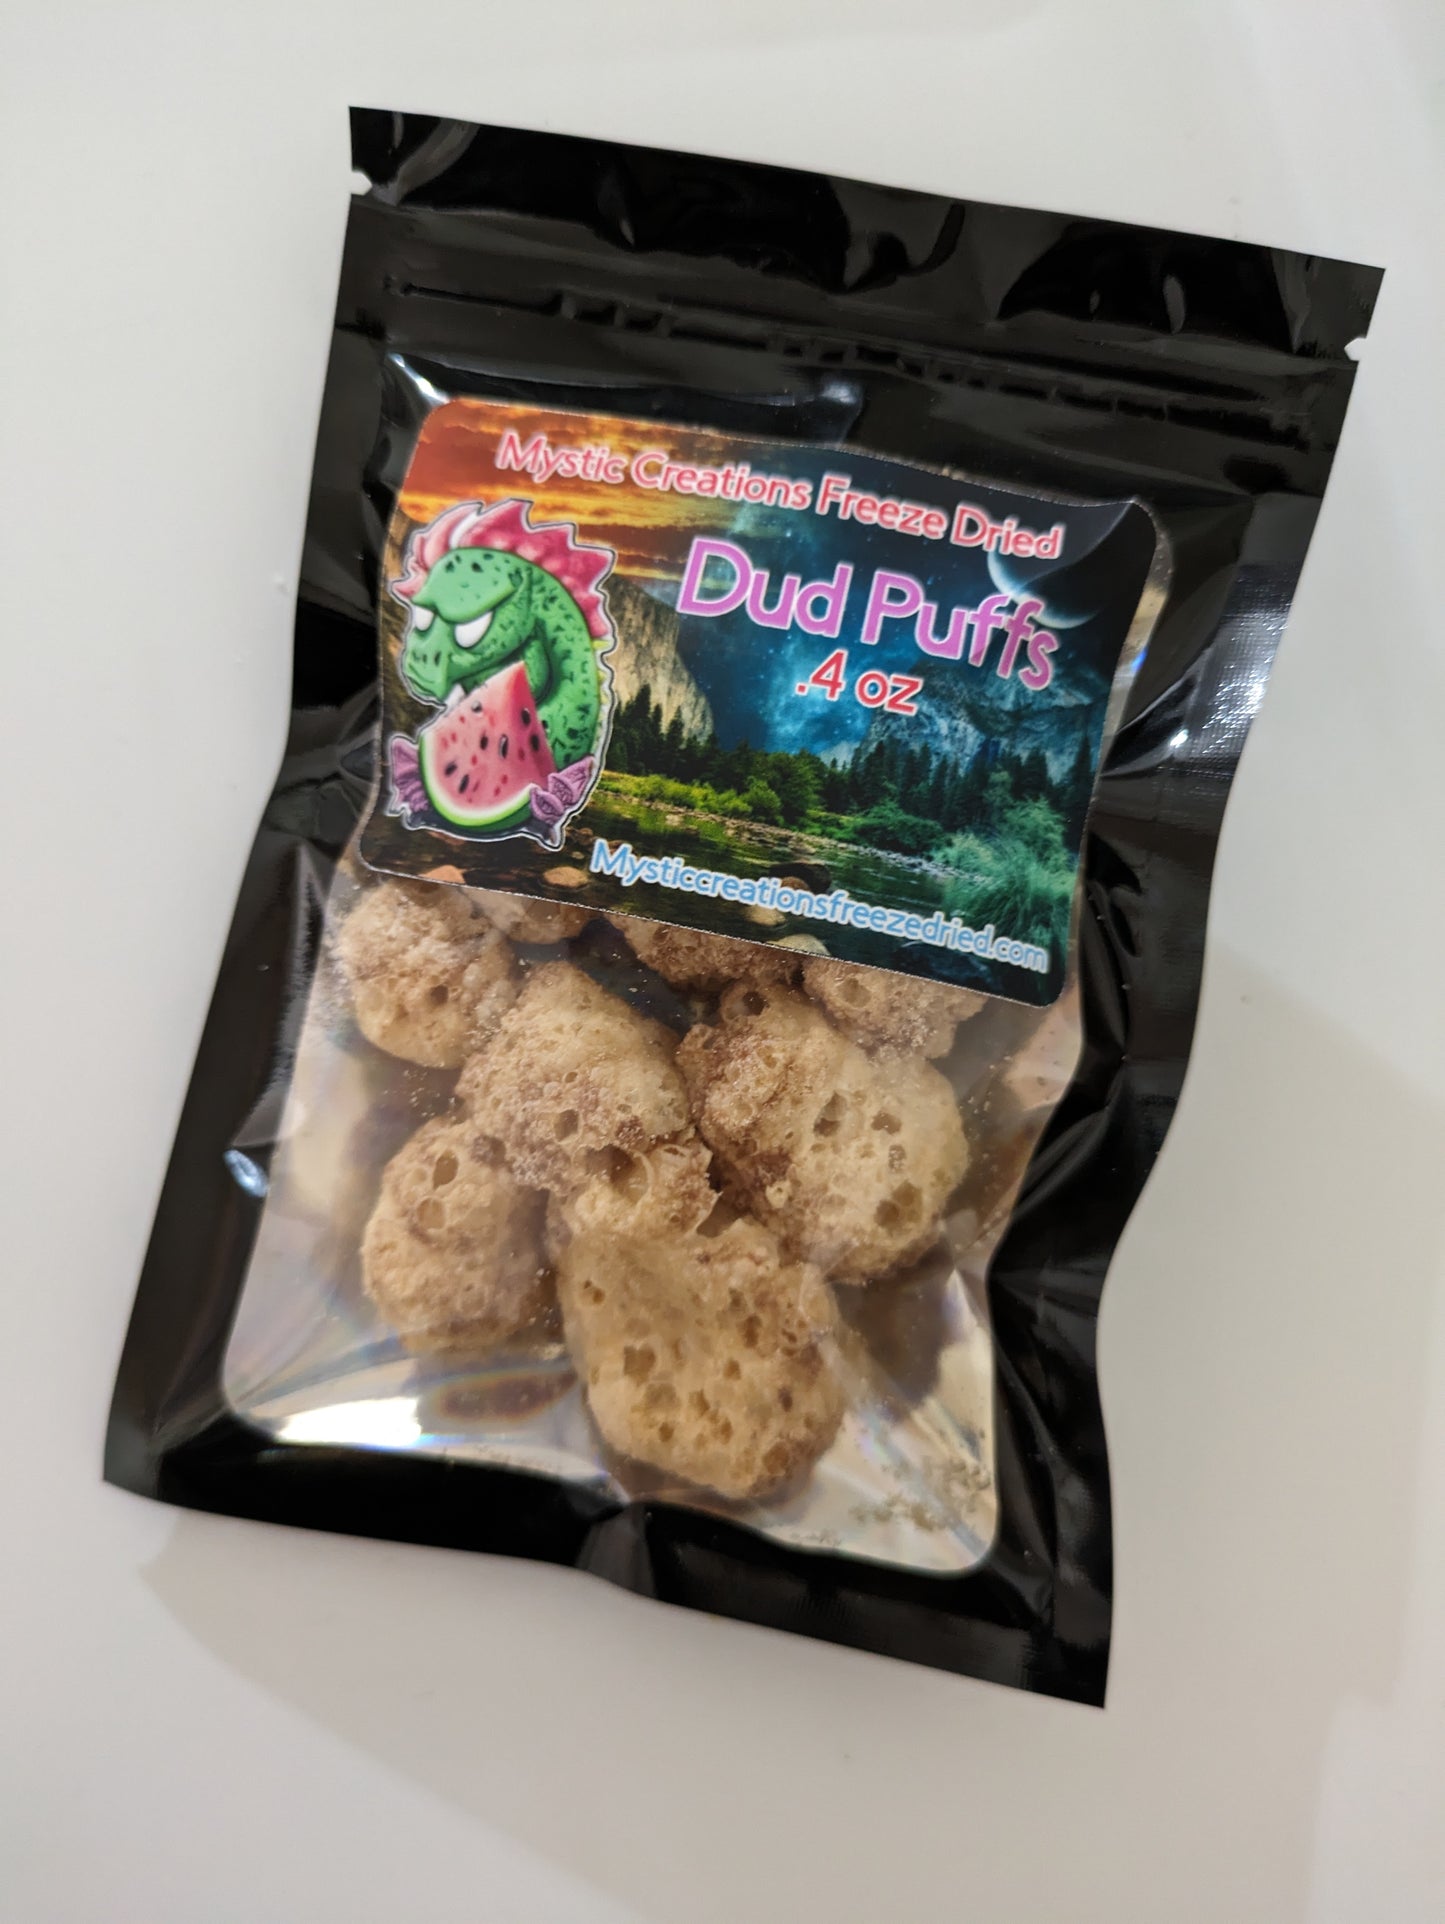 Freeze Dried Dud puffs